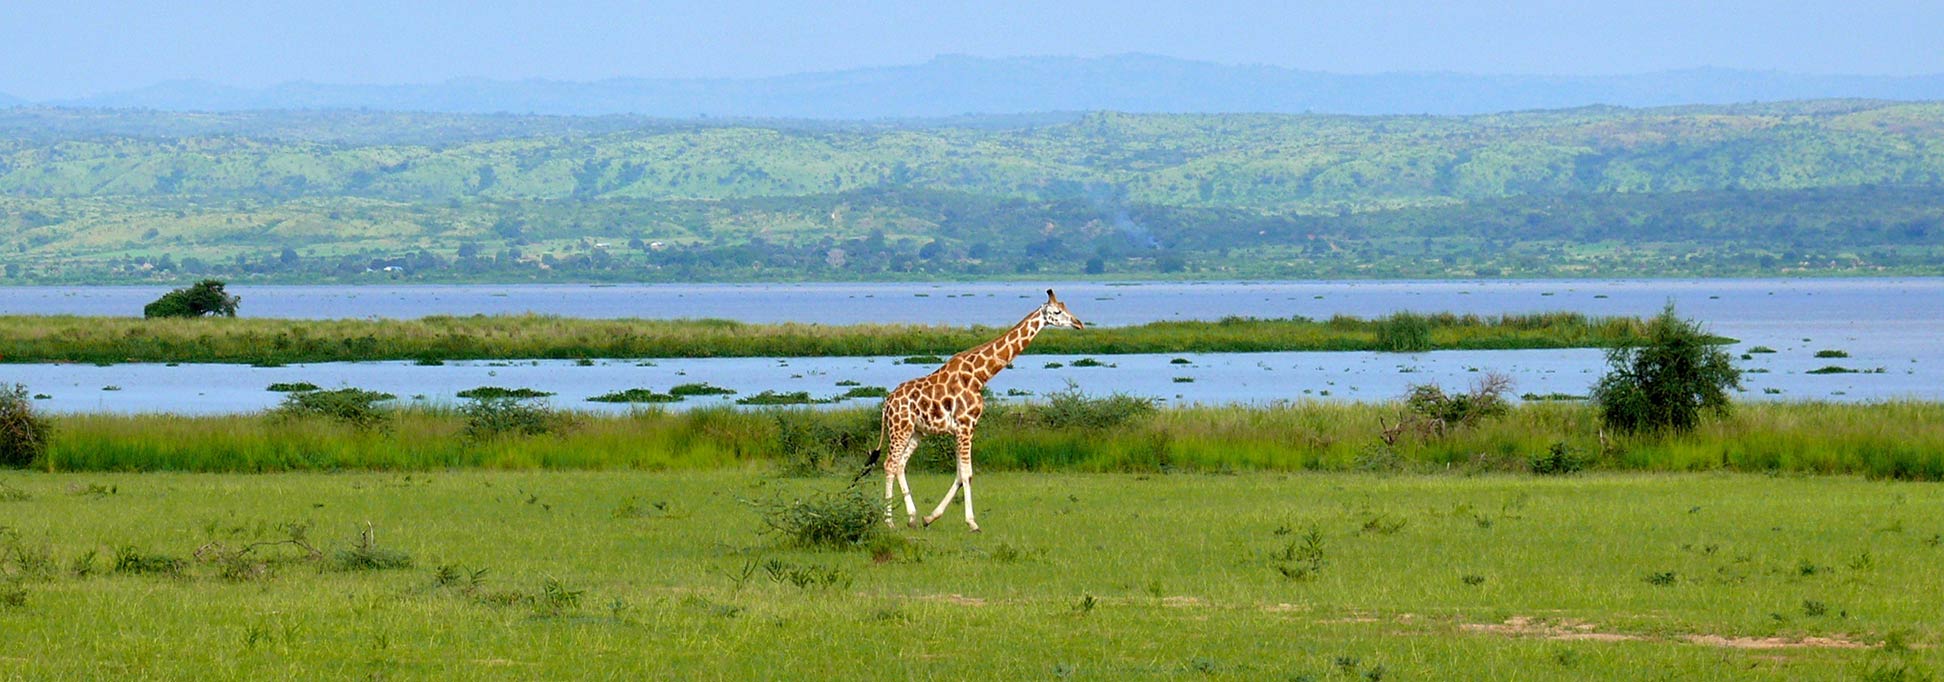 Rothschild's giraffe at the White Nile out of Lake Albert, Murchison Falls National Park